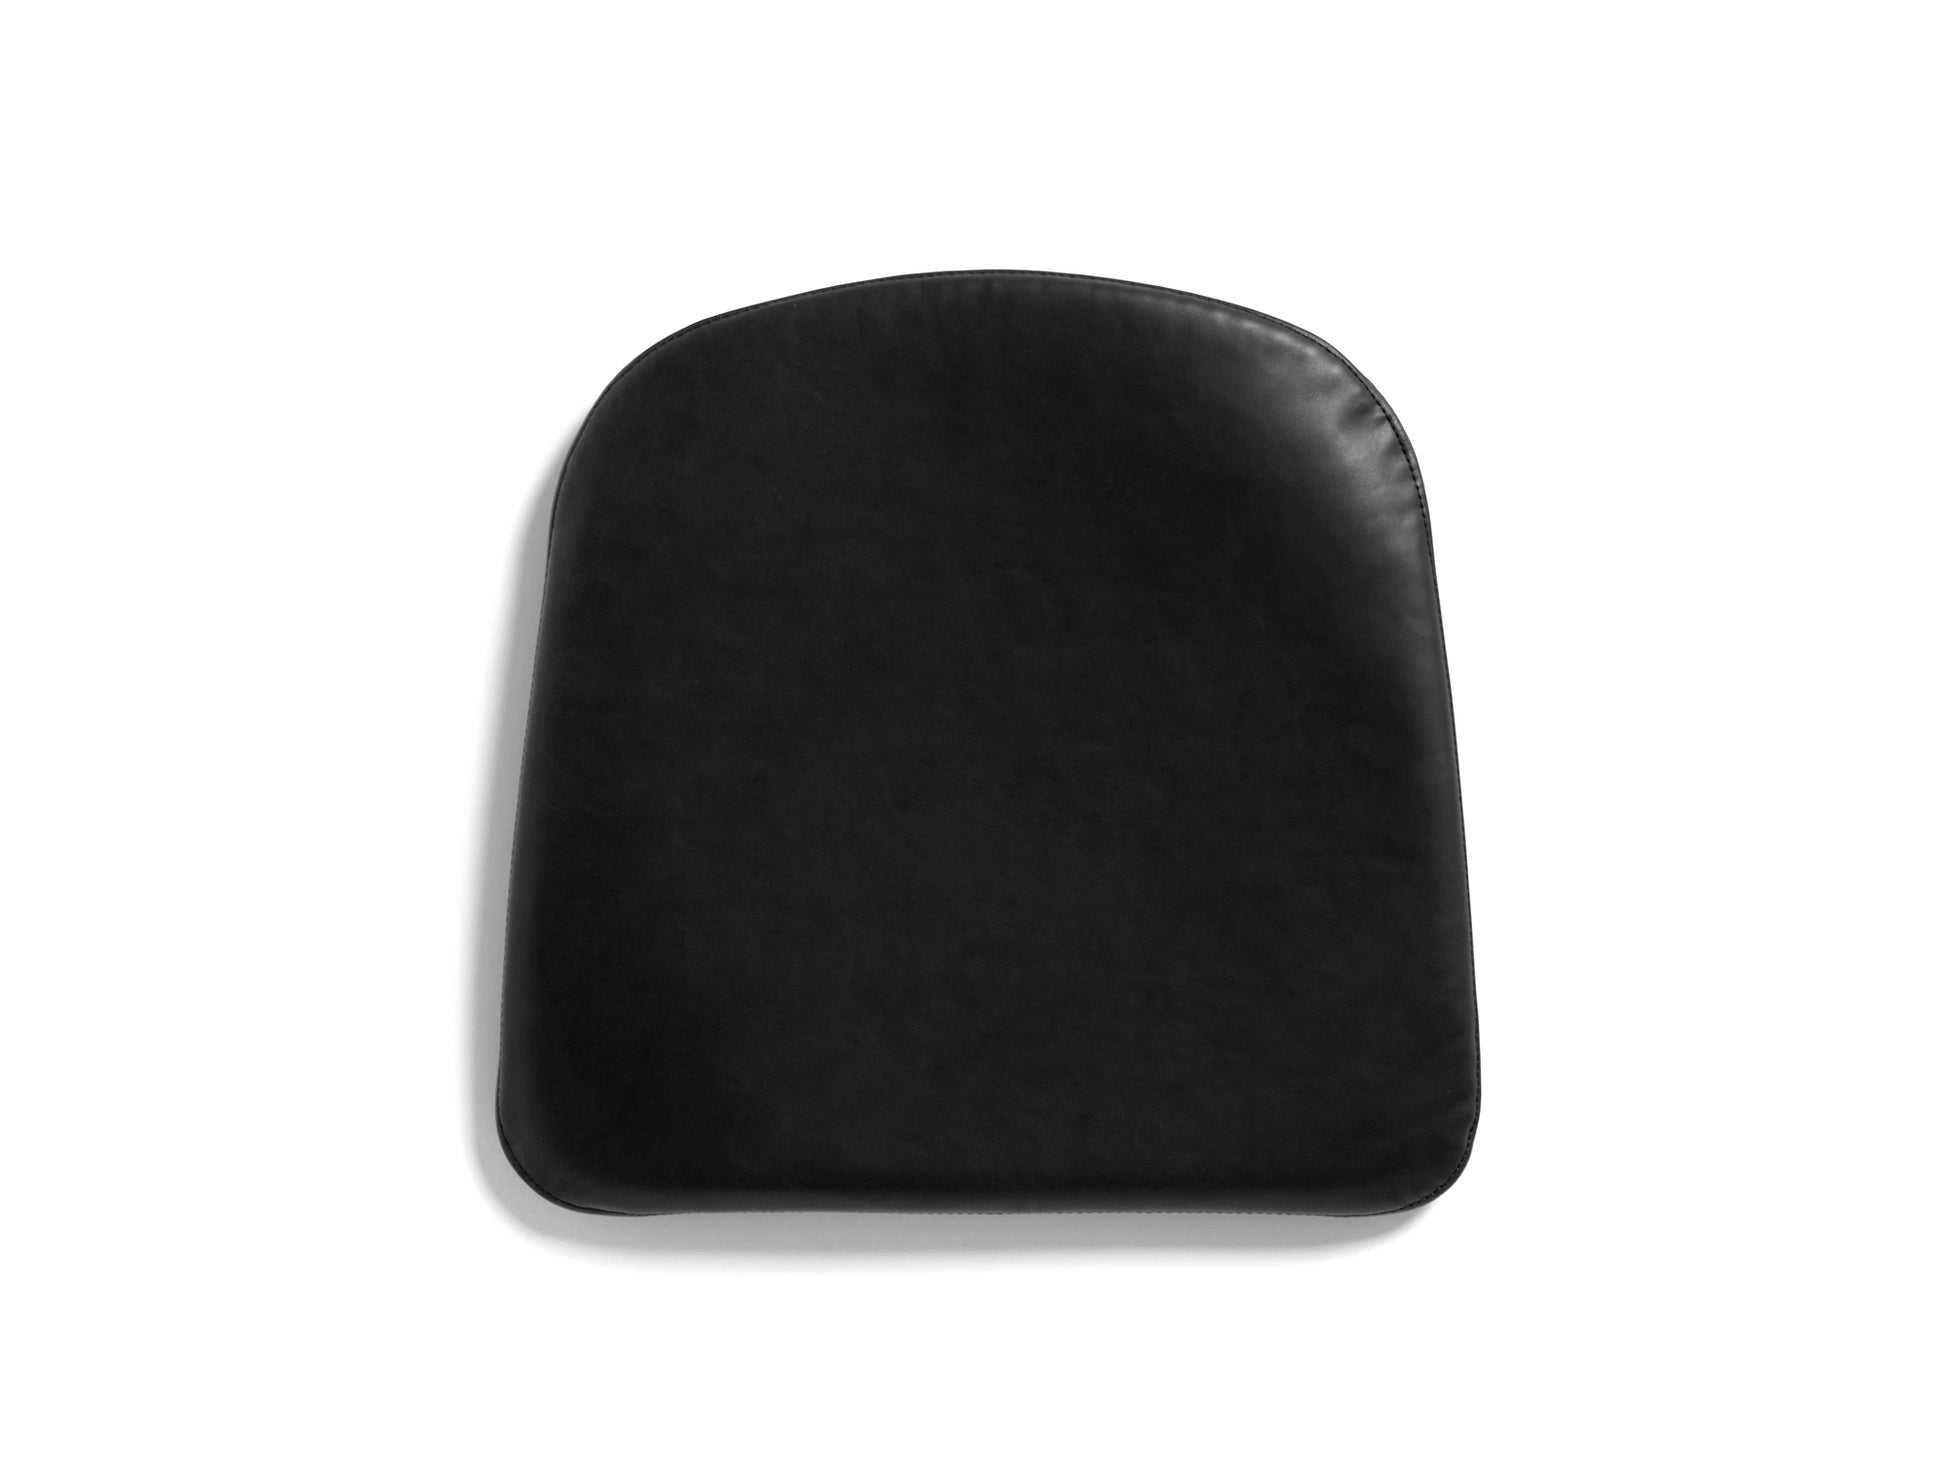 J42 Chair Seat Pad by HAY - Black Sense Leather 